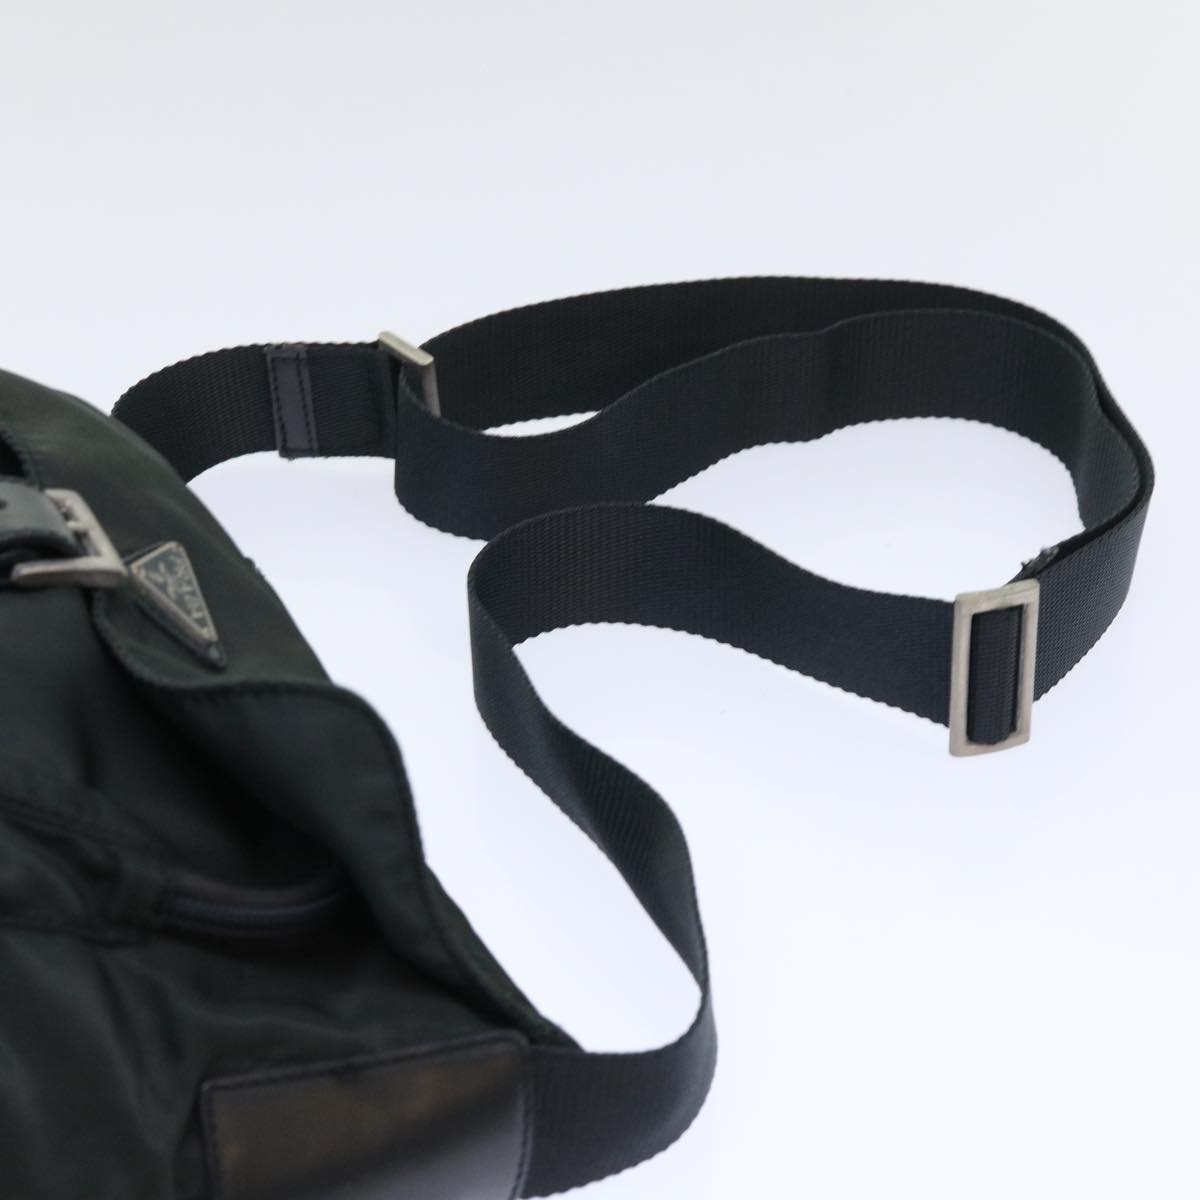 PRADA Shoulder Bag Nylon Khaki Auth 51019